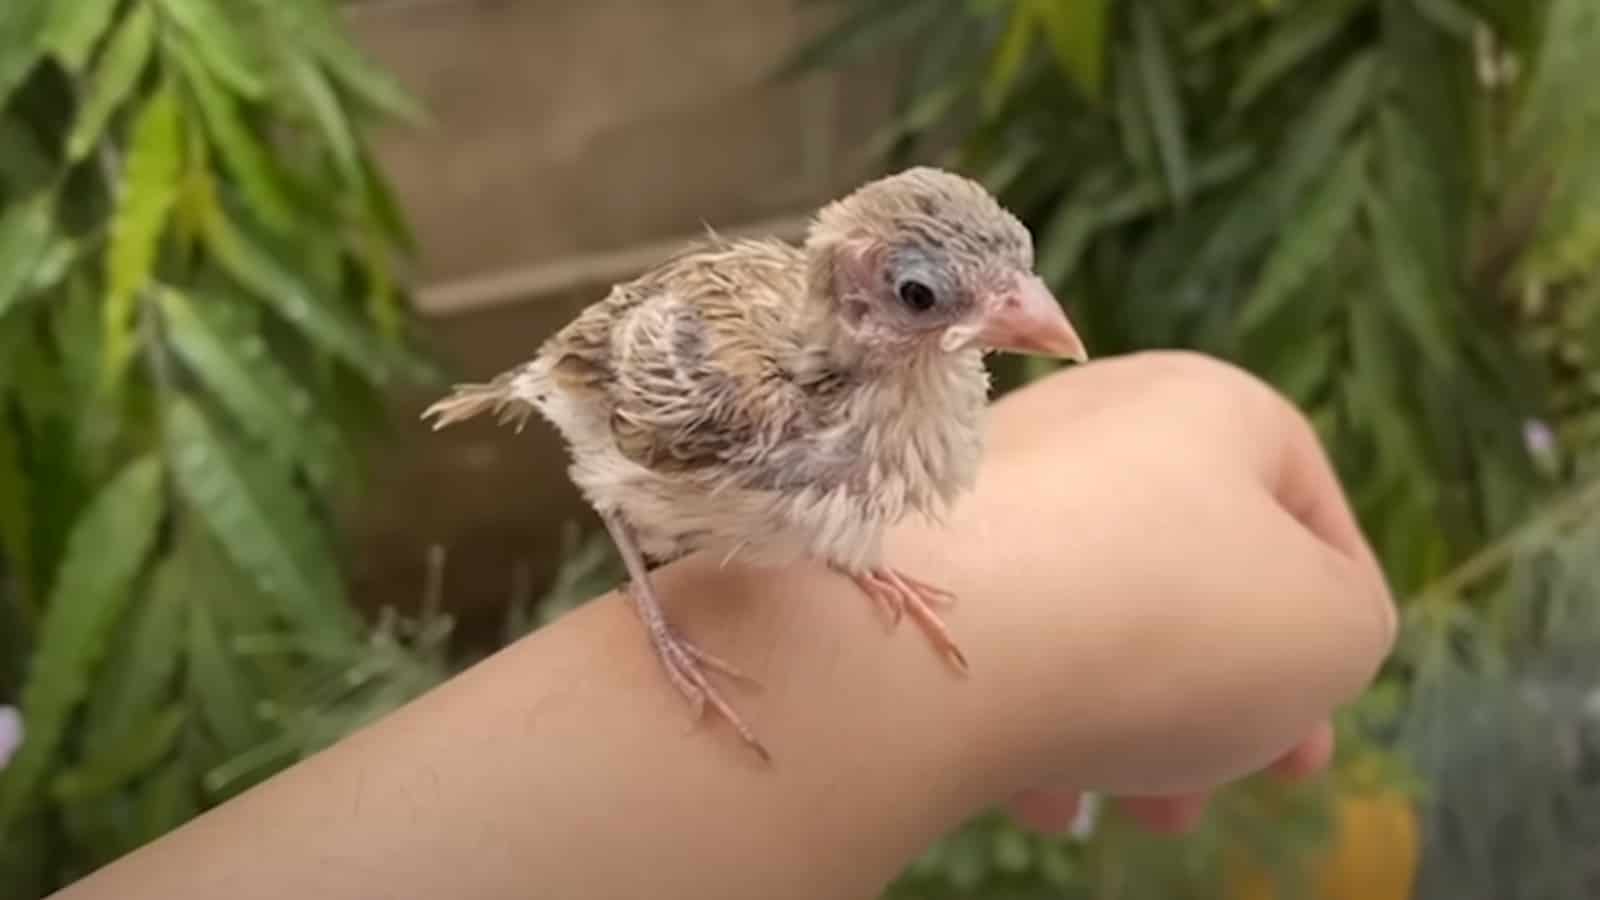 Tiny bird sitting on a woman's hand